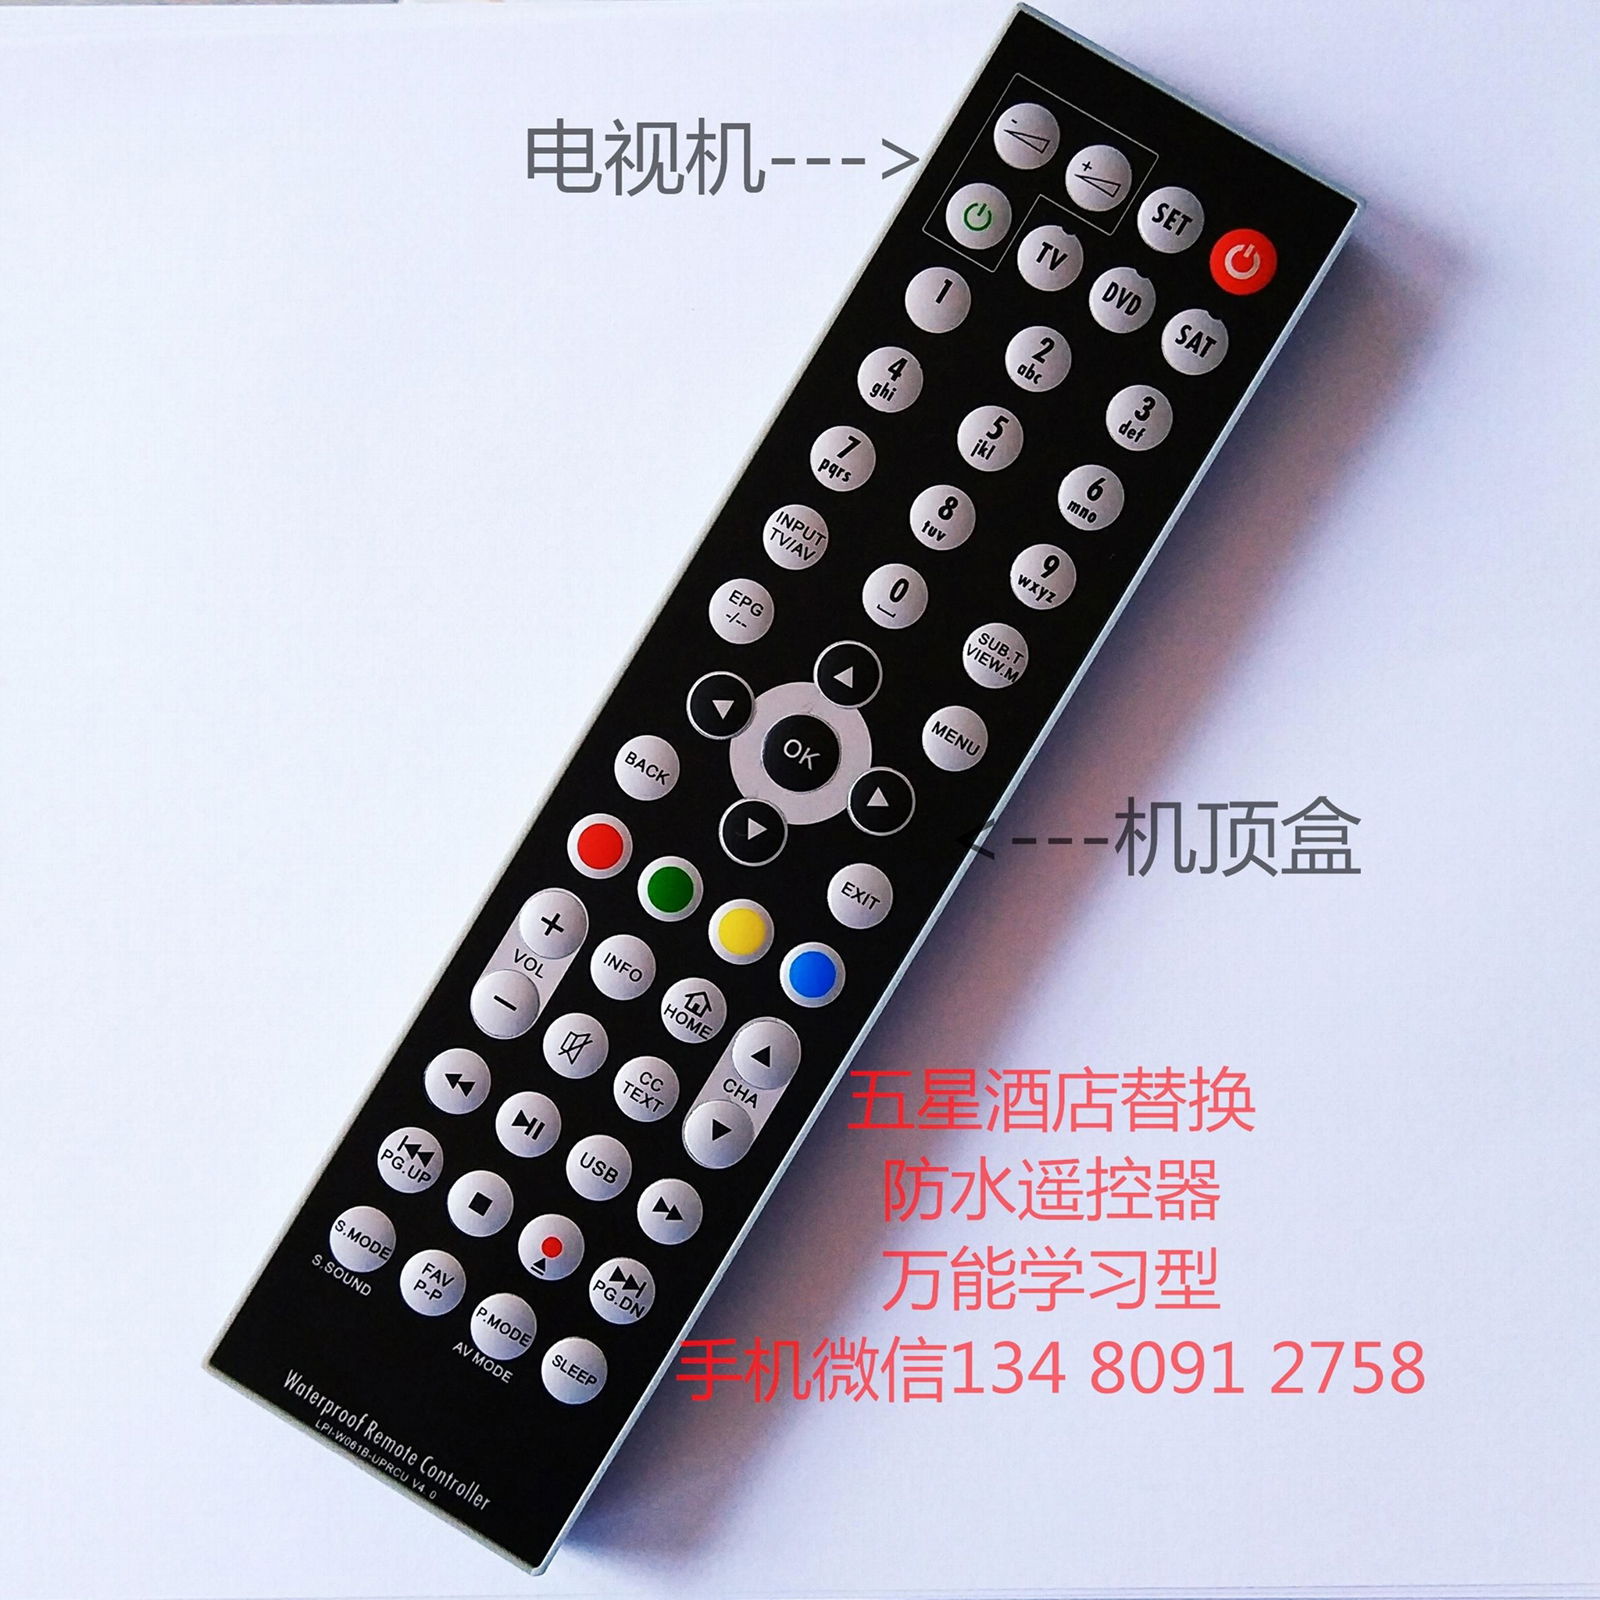 HOTEL LCD TV remote control sharp lg sony wtv konci kata samsung 3